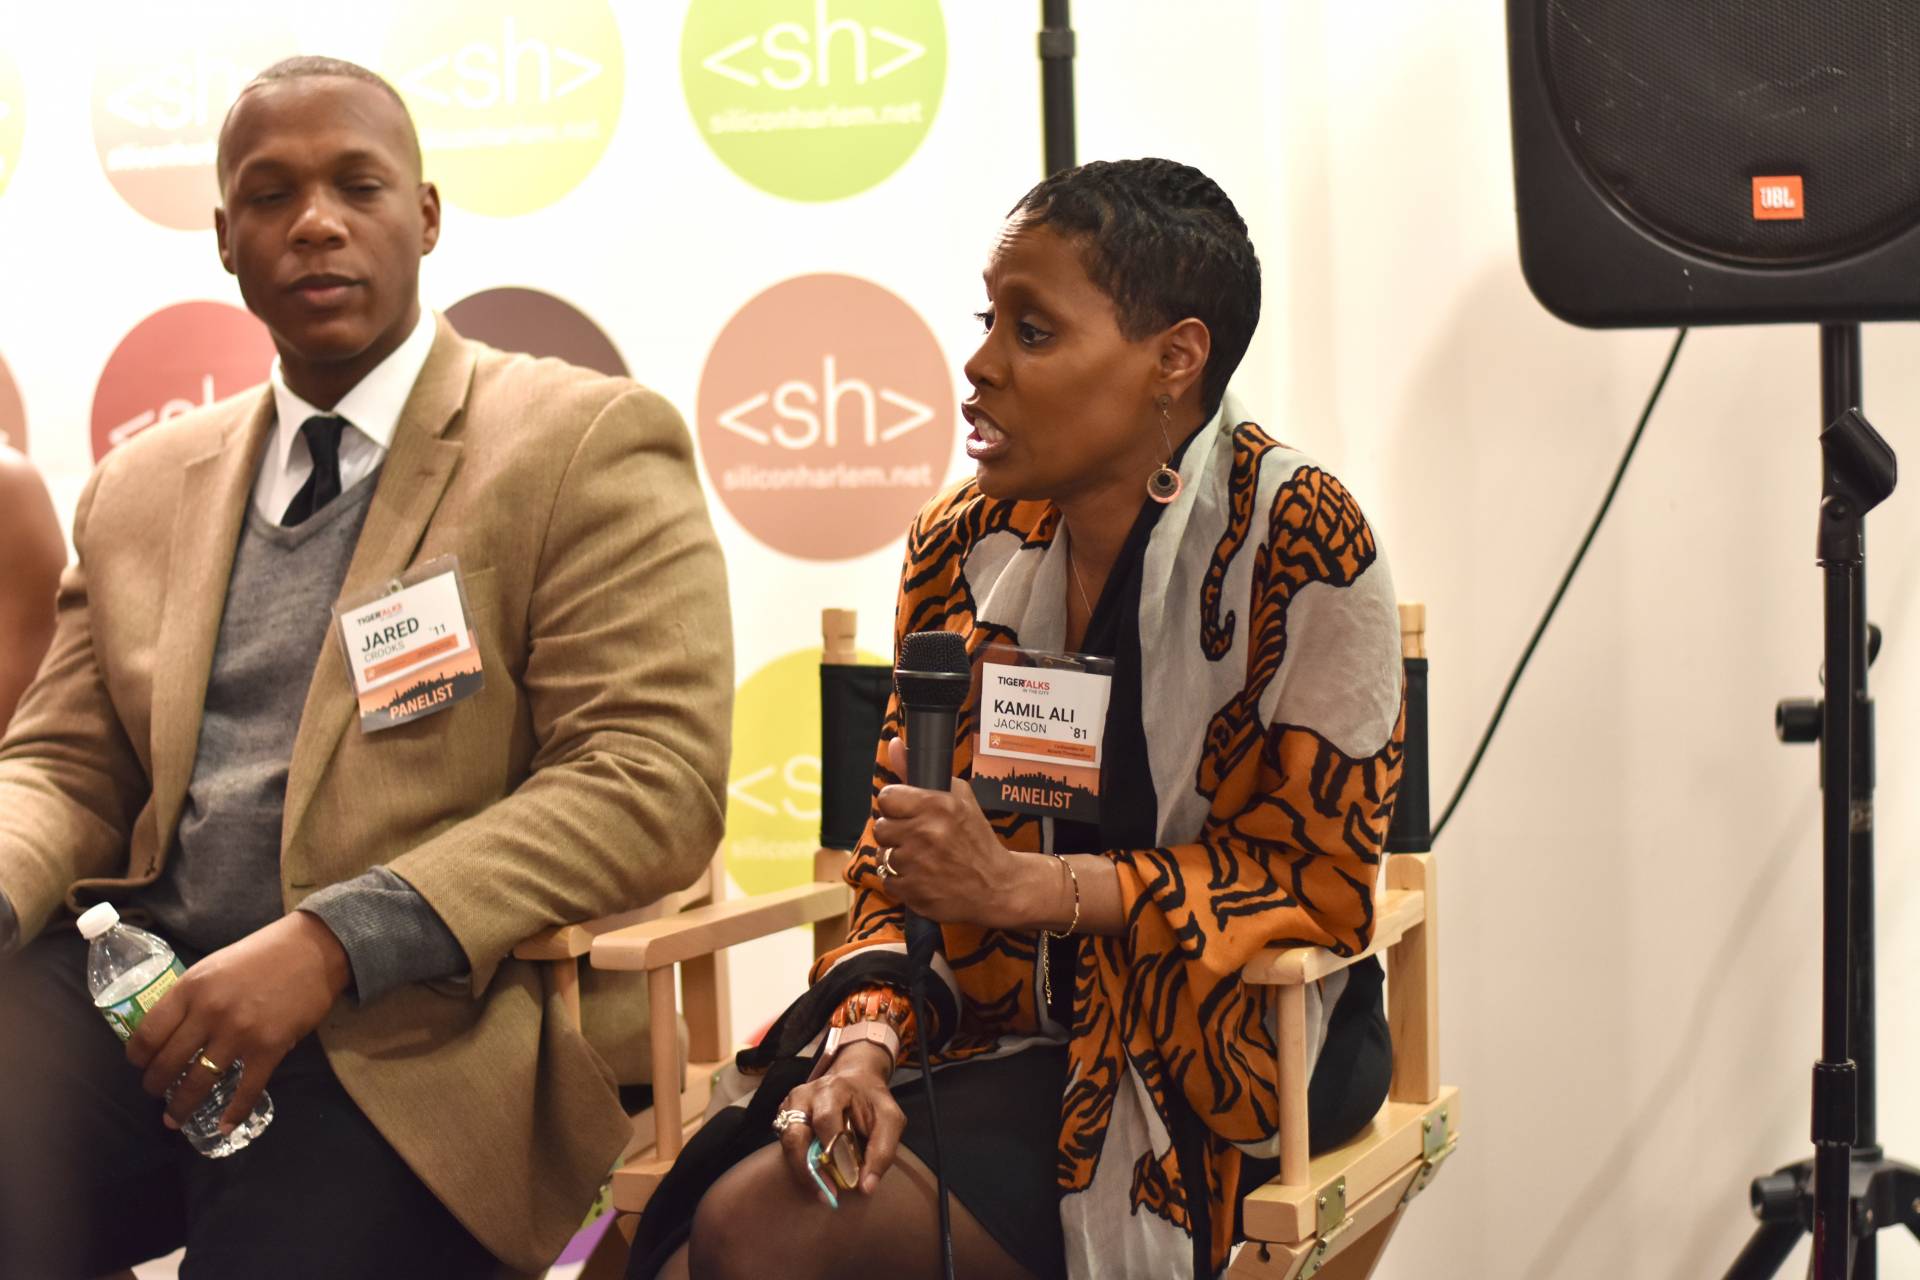 Kamil Ali Jackson speaks about her experiences as an entrepreneur